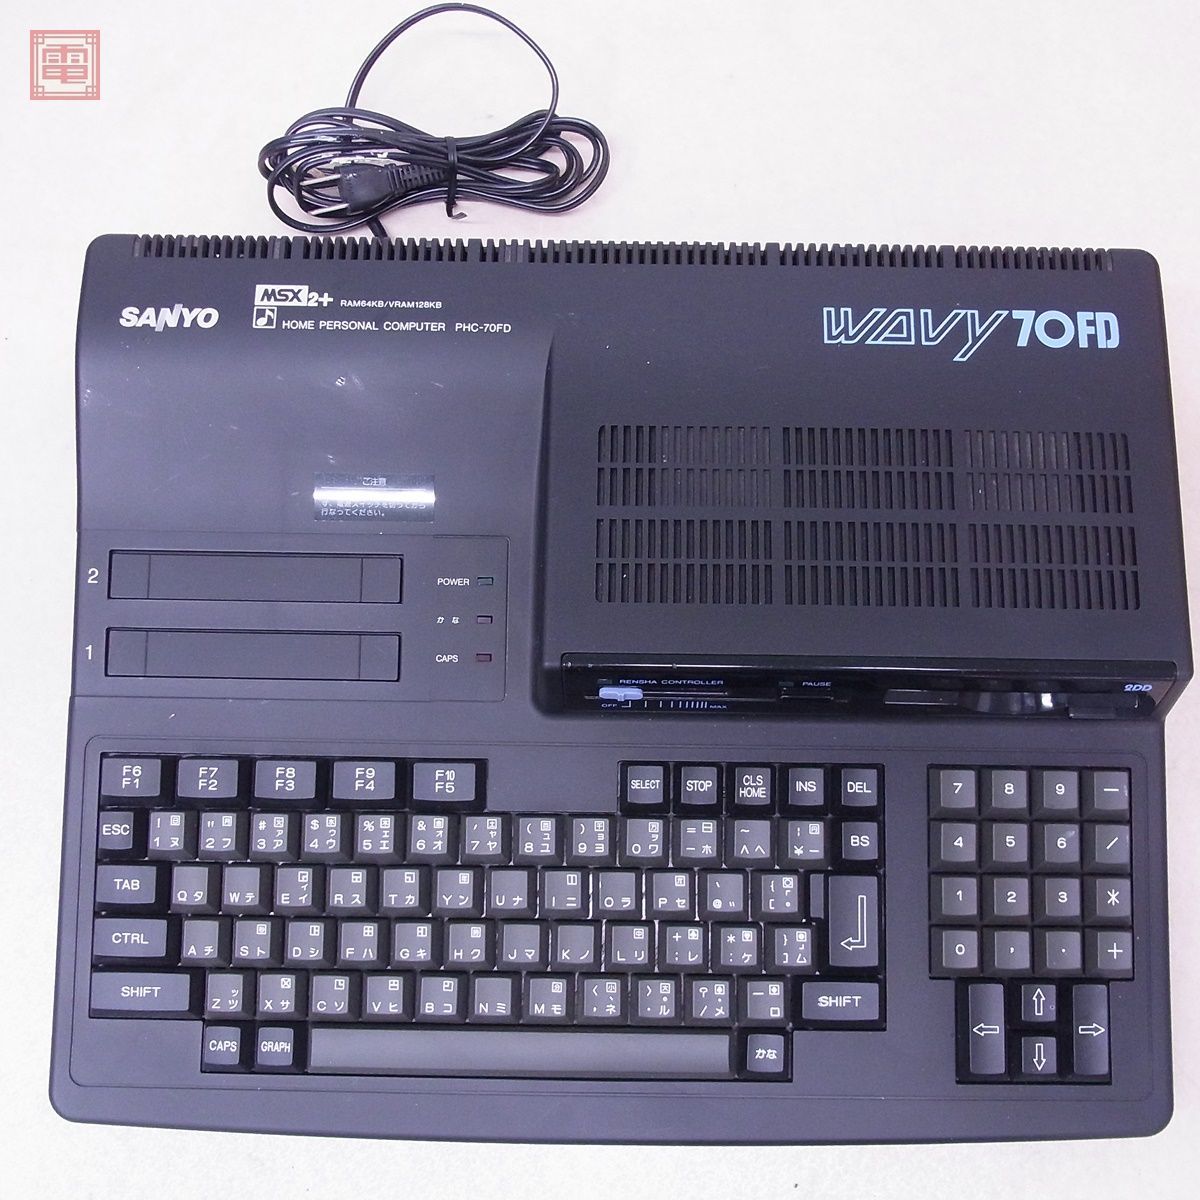 SANYO MSX2+ WAVY 70FD (PHC-70FD) 本体 サンヨー SANYO 箱・FD